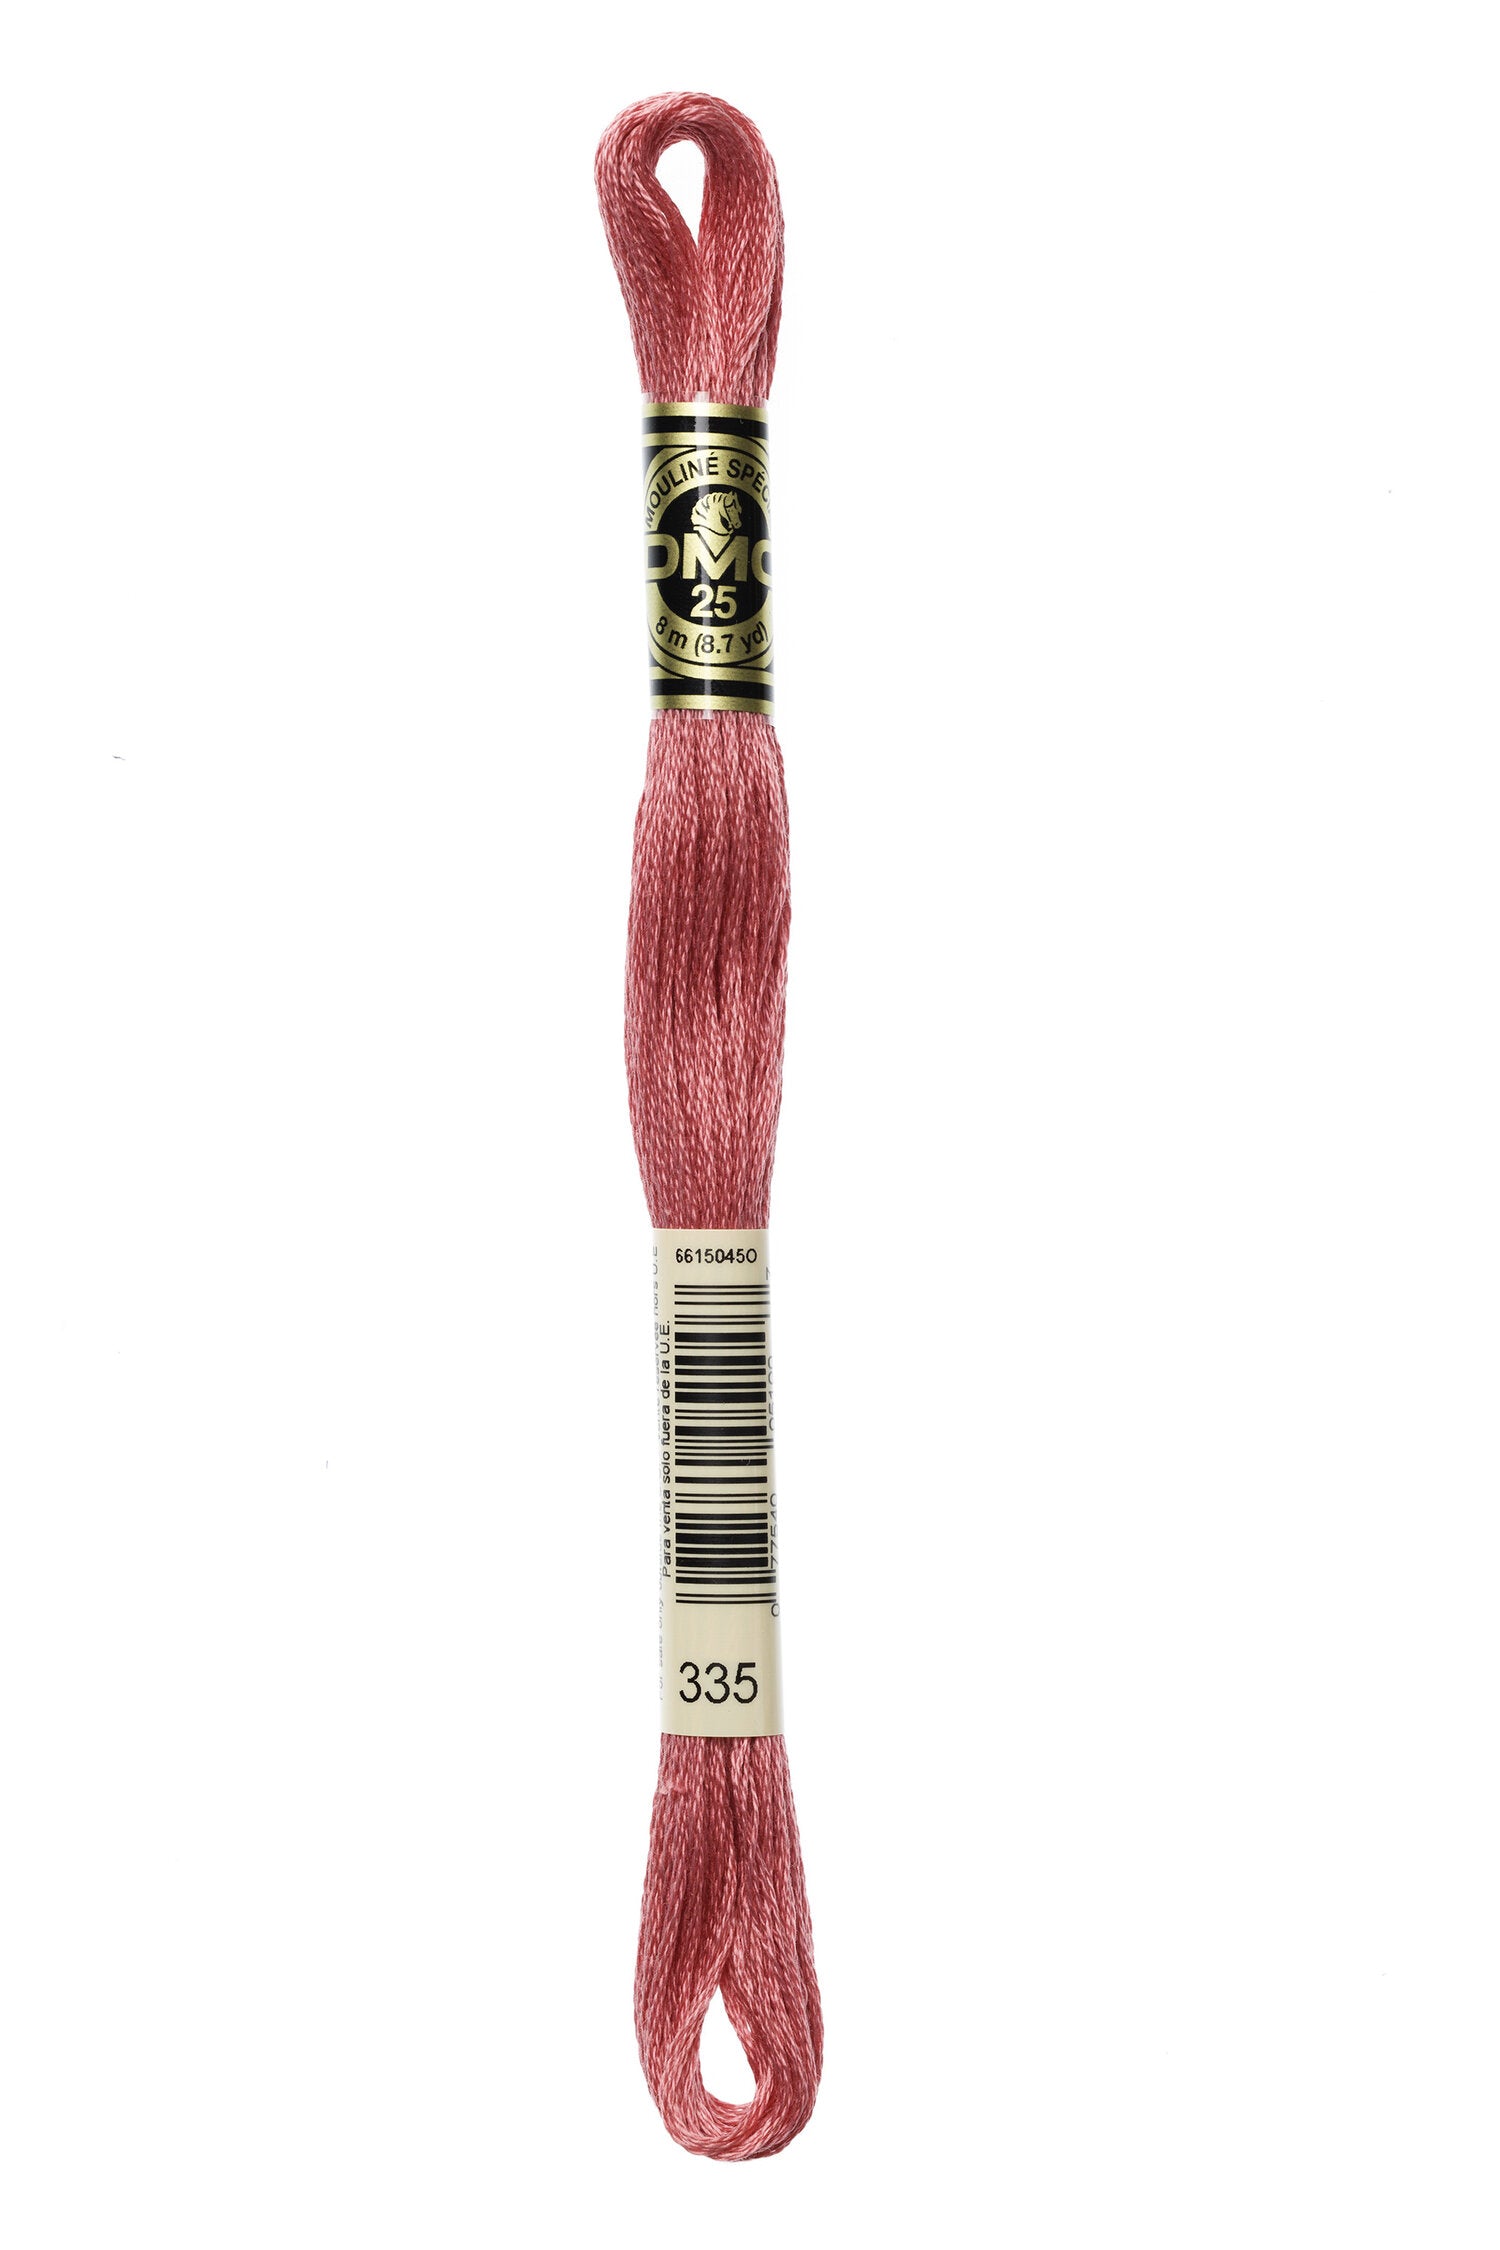 DMC 335 - Rose - DMC 6 Strand Embroidery Thread, Thread & Floss, Thread & Floss, The Crafty Grimalkin - A Cross Stitch Store